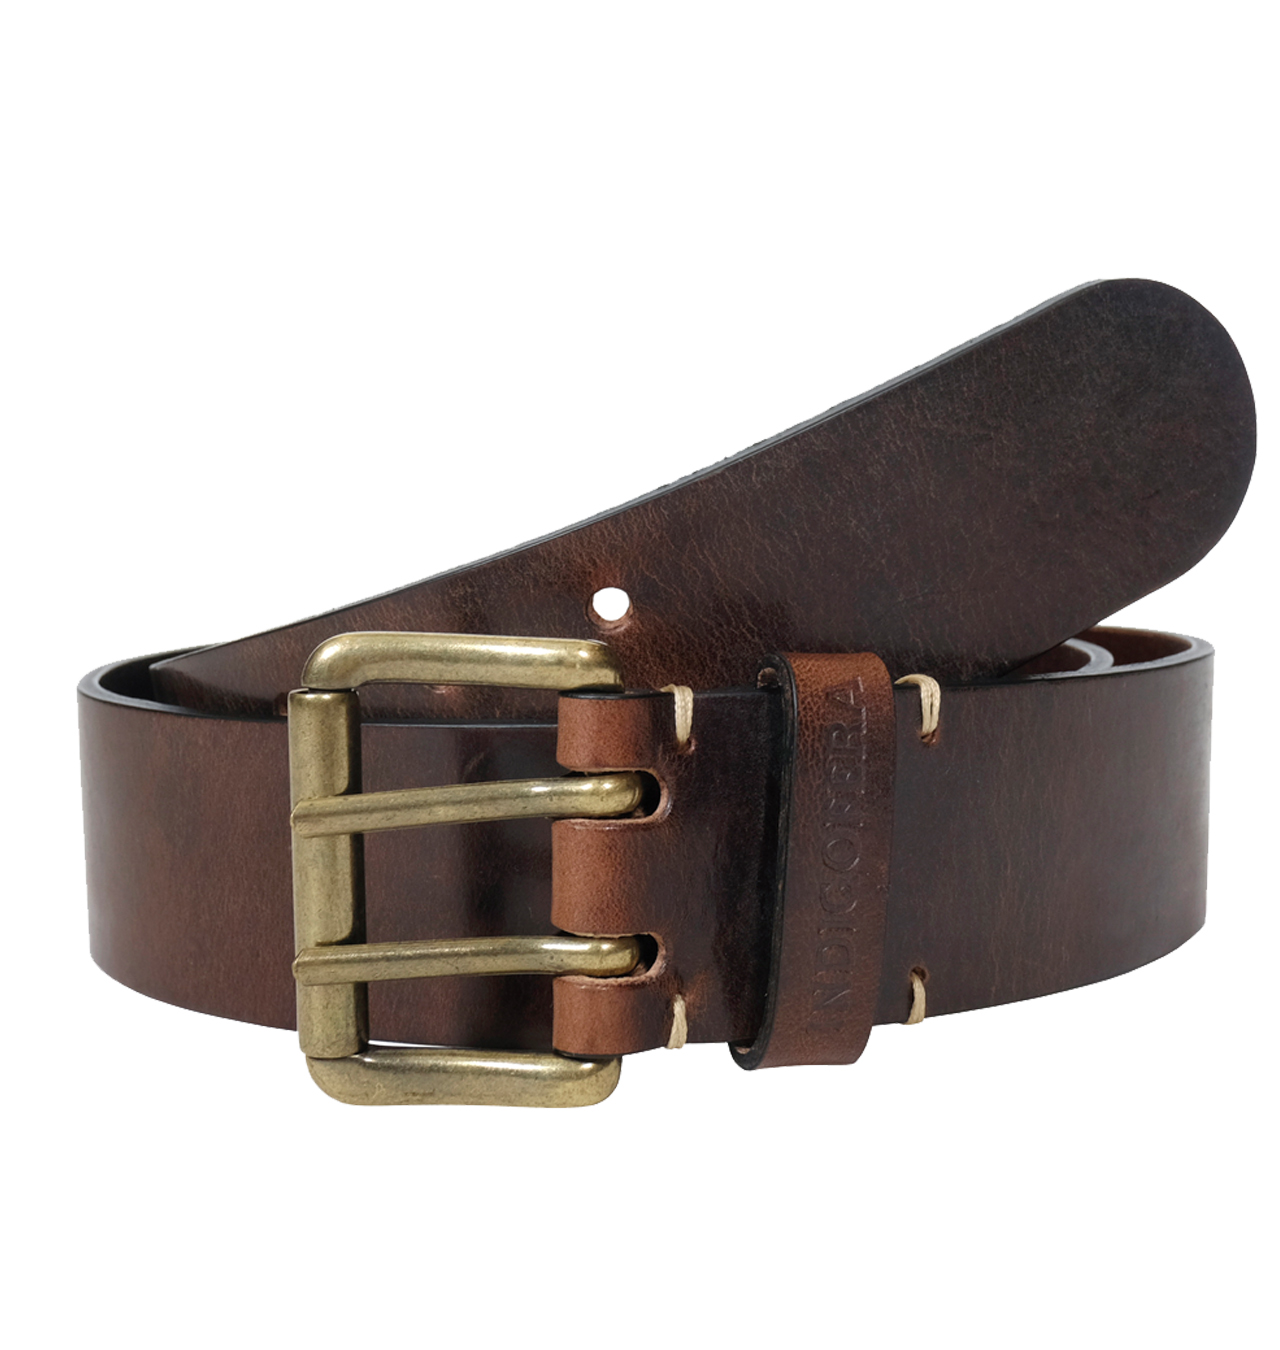 Indigofera---Danko-Leather-Belt-2-prong---Dark-Brown-1